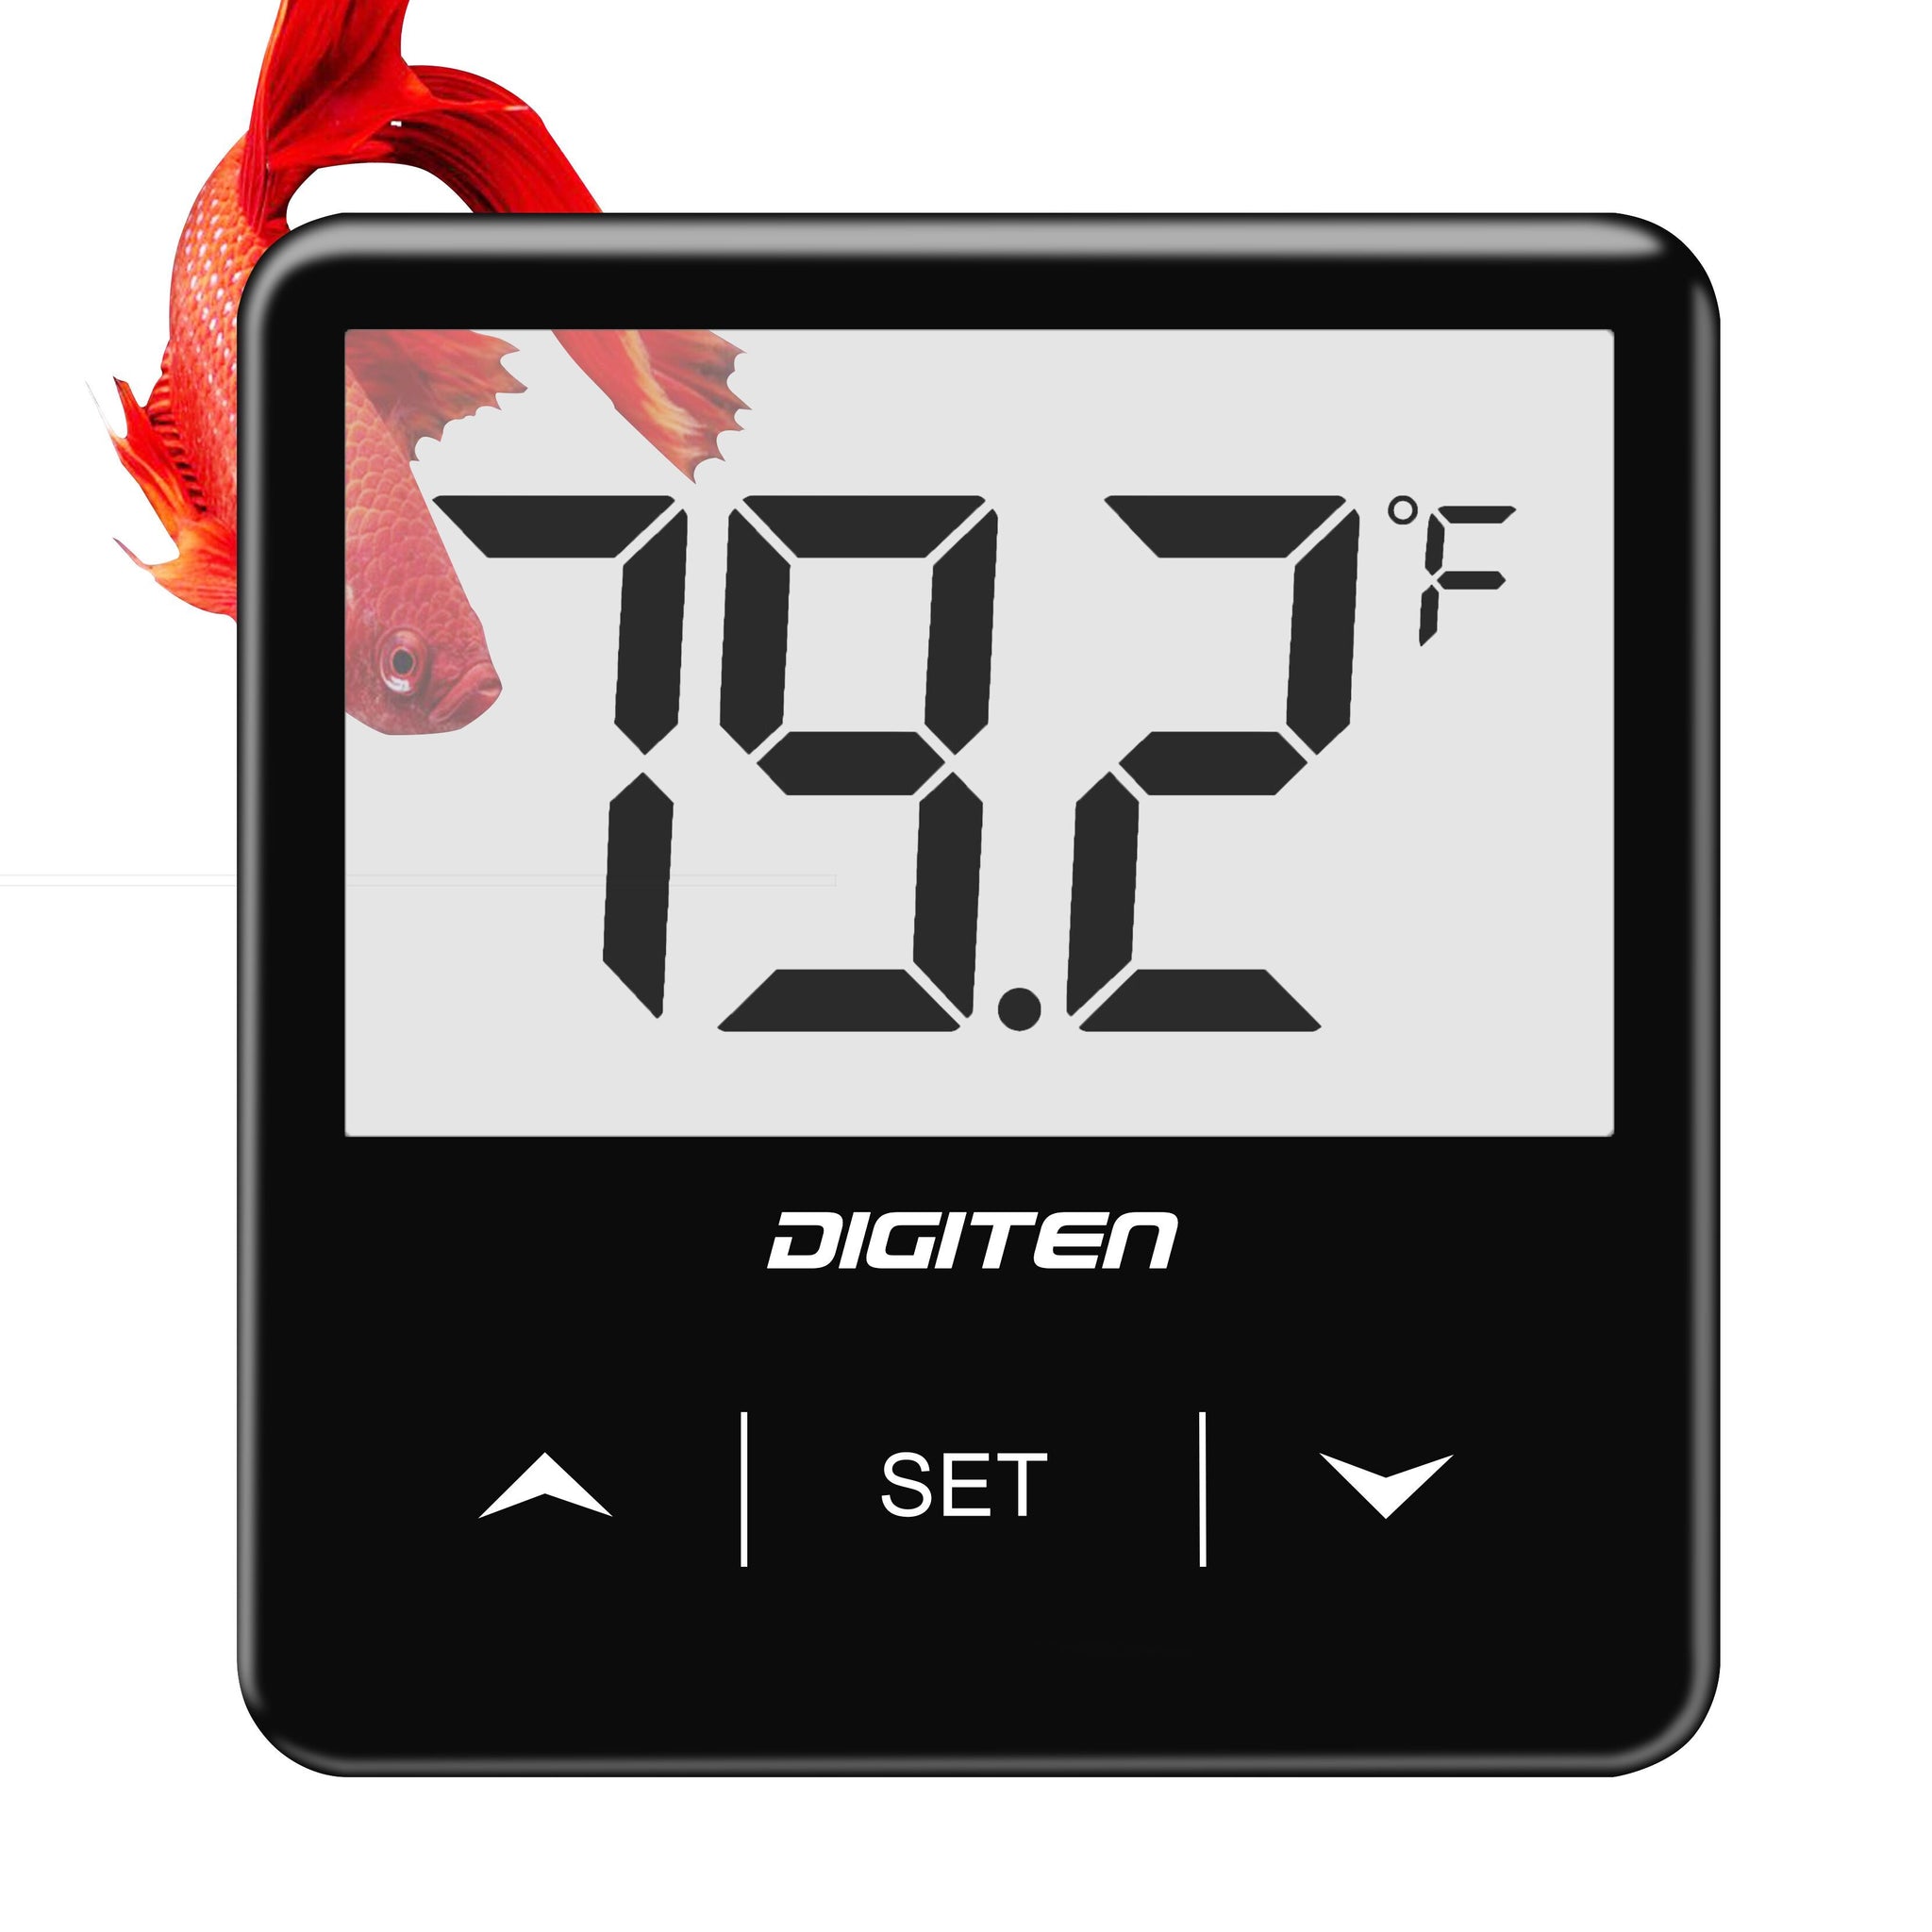 Great Choice Products Mini Reptile Terrarium Digital Thermometer